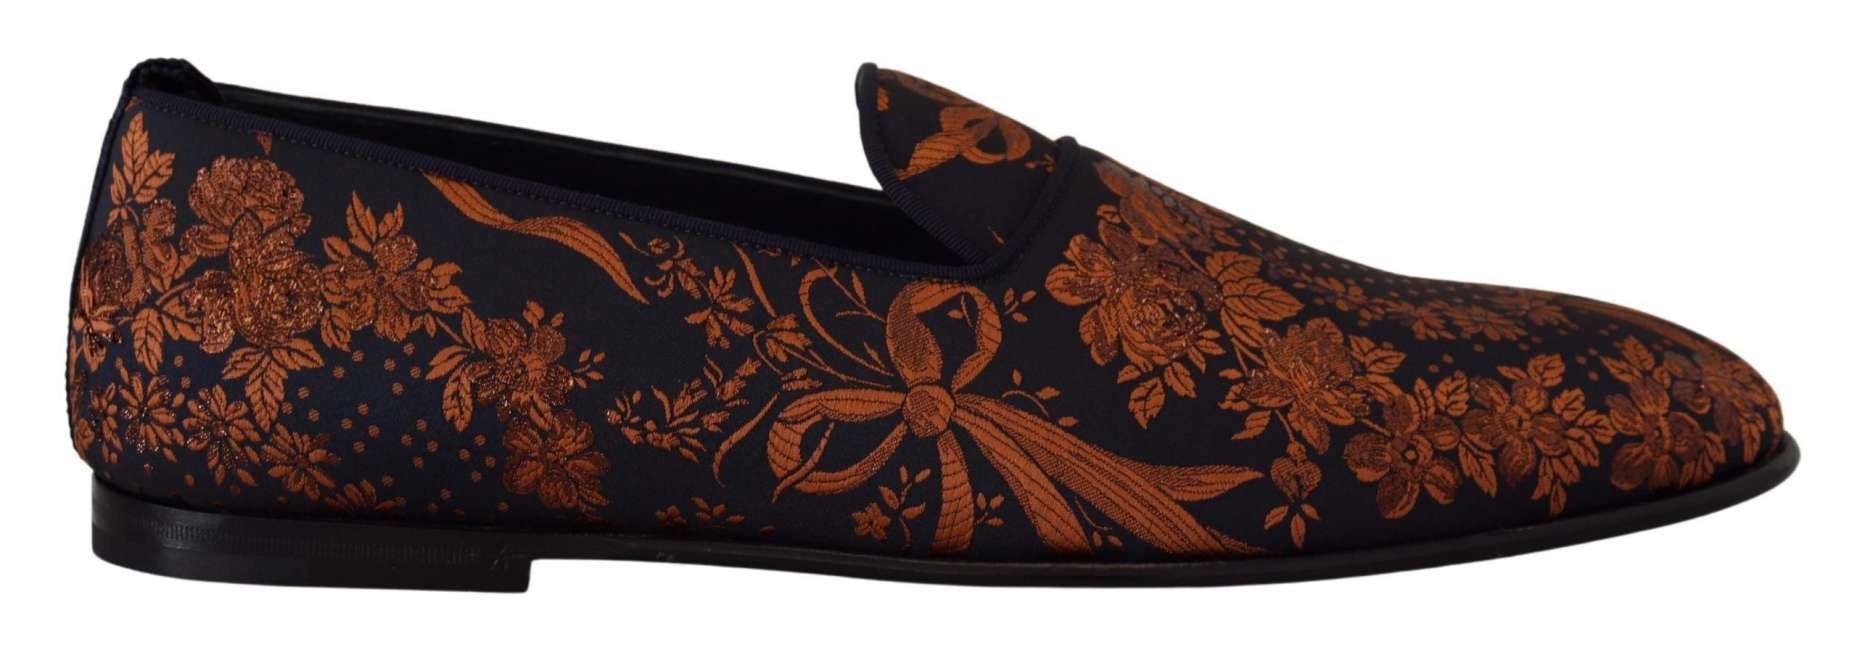 Priser på Dolce & Gabbana Loafers Sko